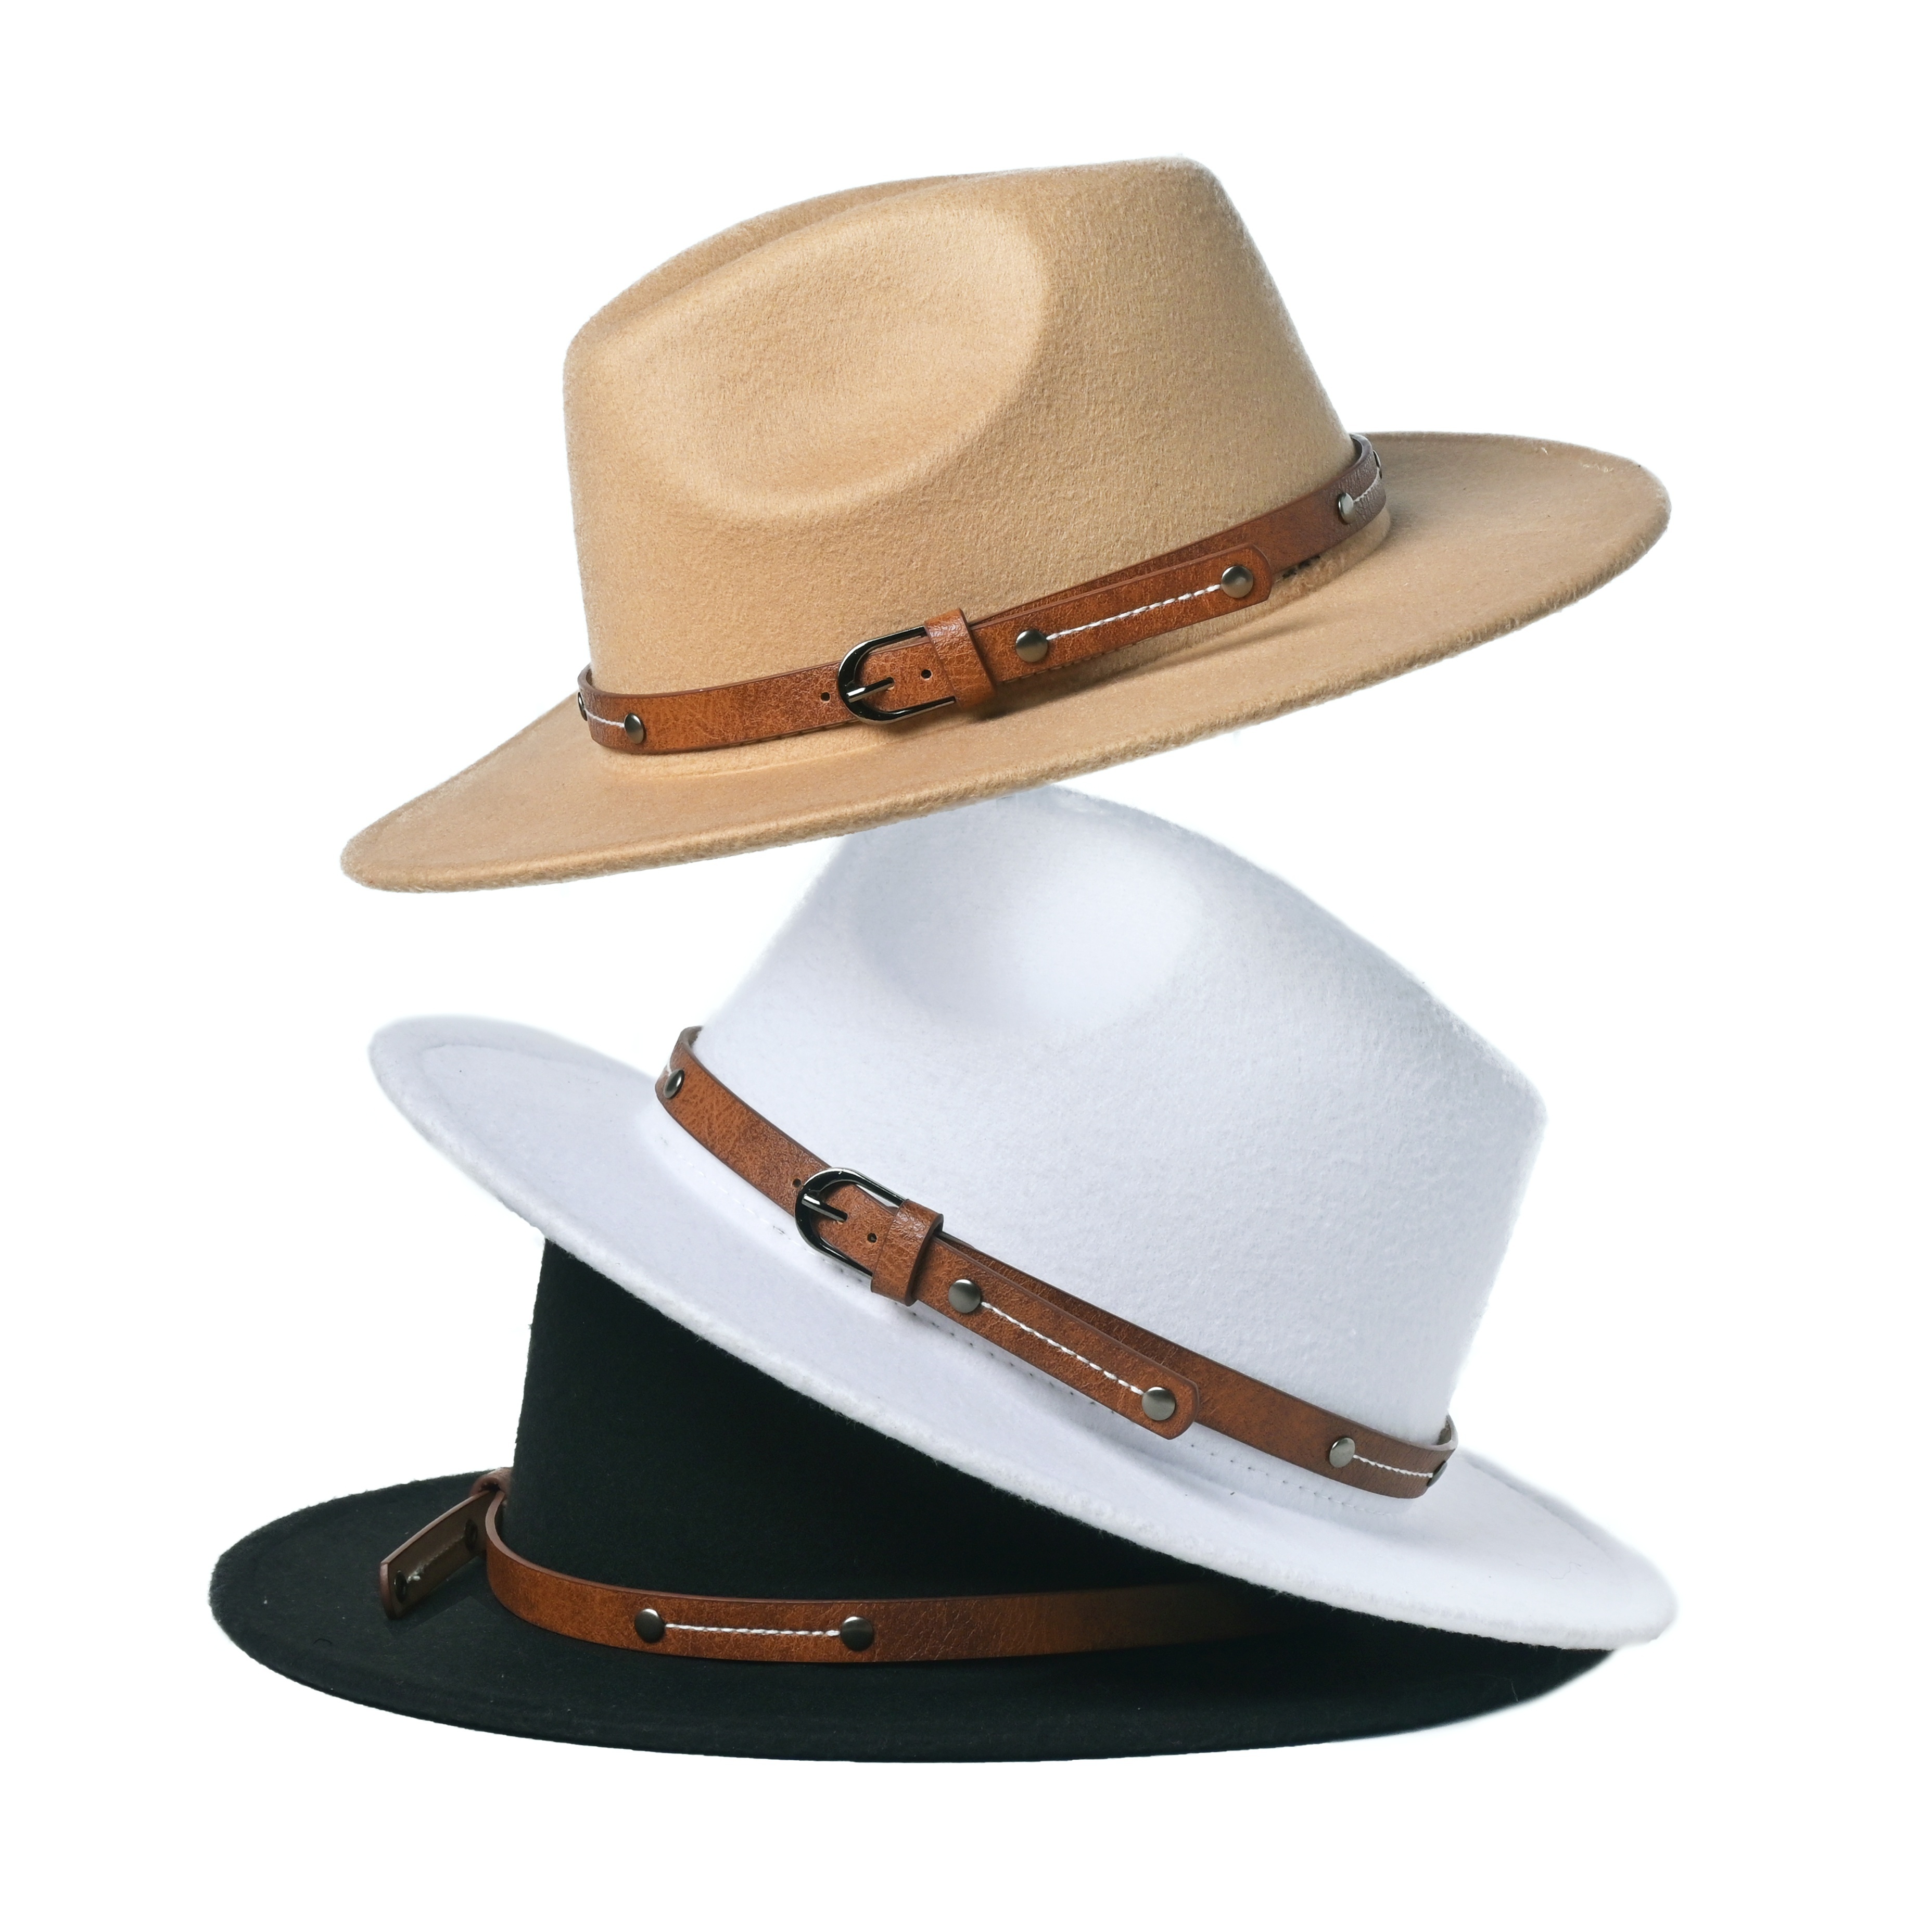 Unittype Floppy Hats for Women Classic Wide Brim Hat Felt Panama Hat with Adjustable Belt Buckle Panama Jazz Dress Hat